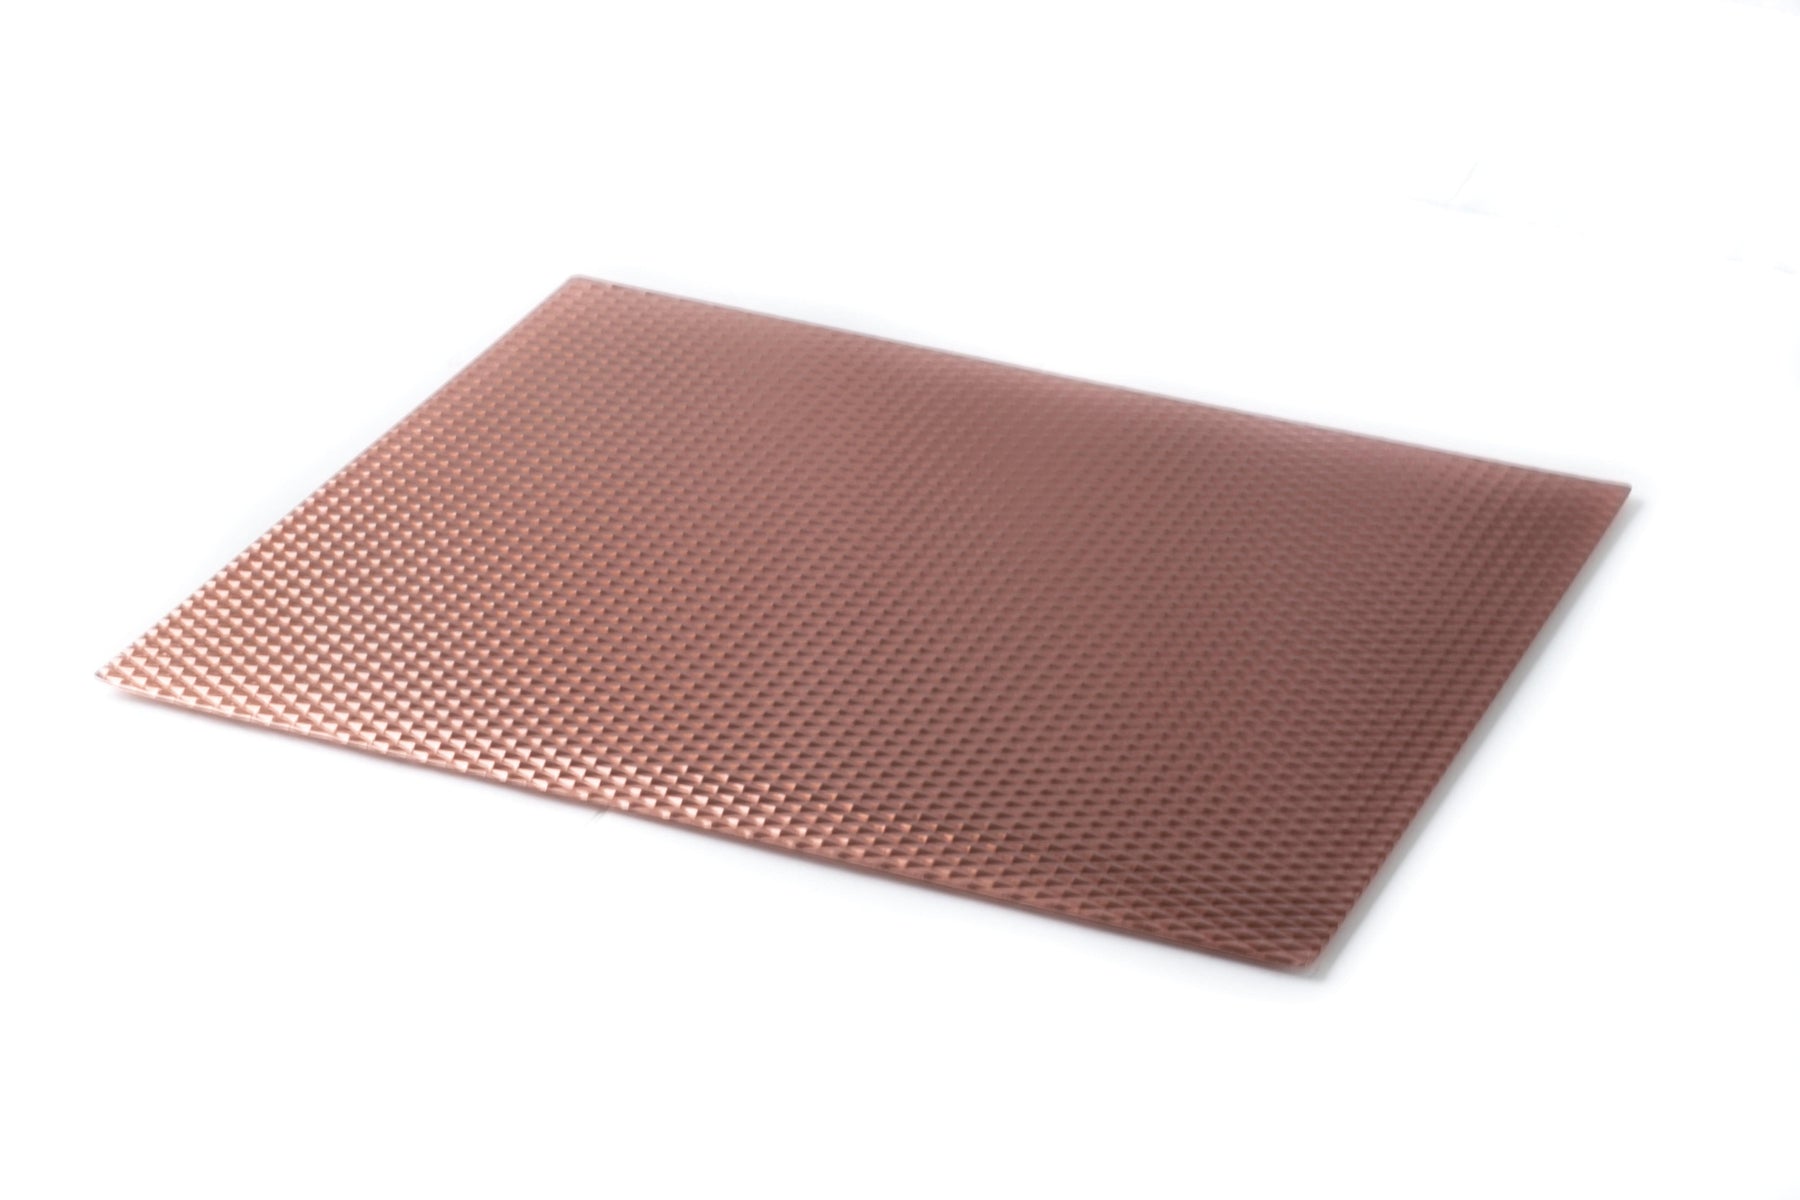 Set of 3 Heat Resistant, Metal, Counter Protector Mats - Warm Copper Color  